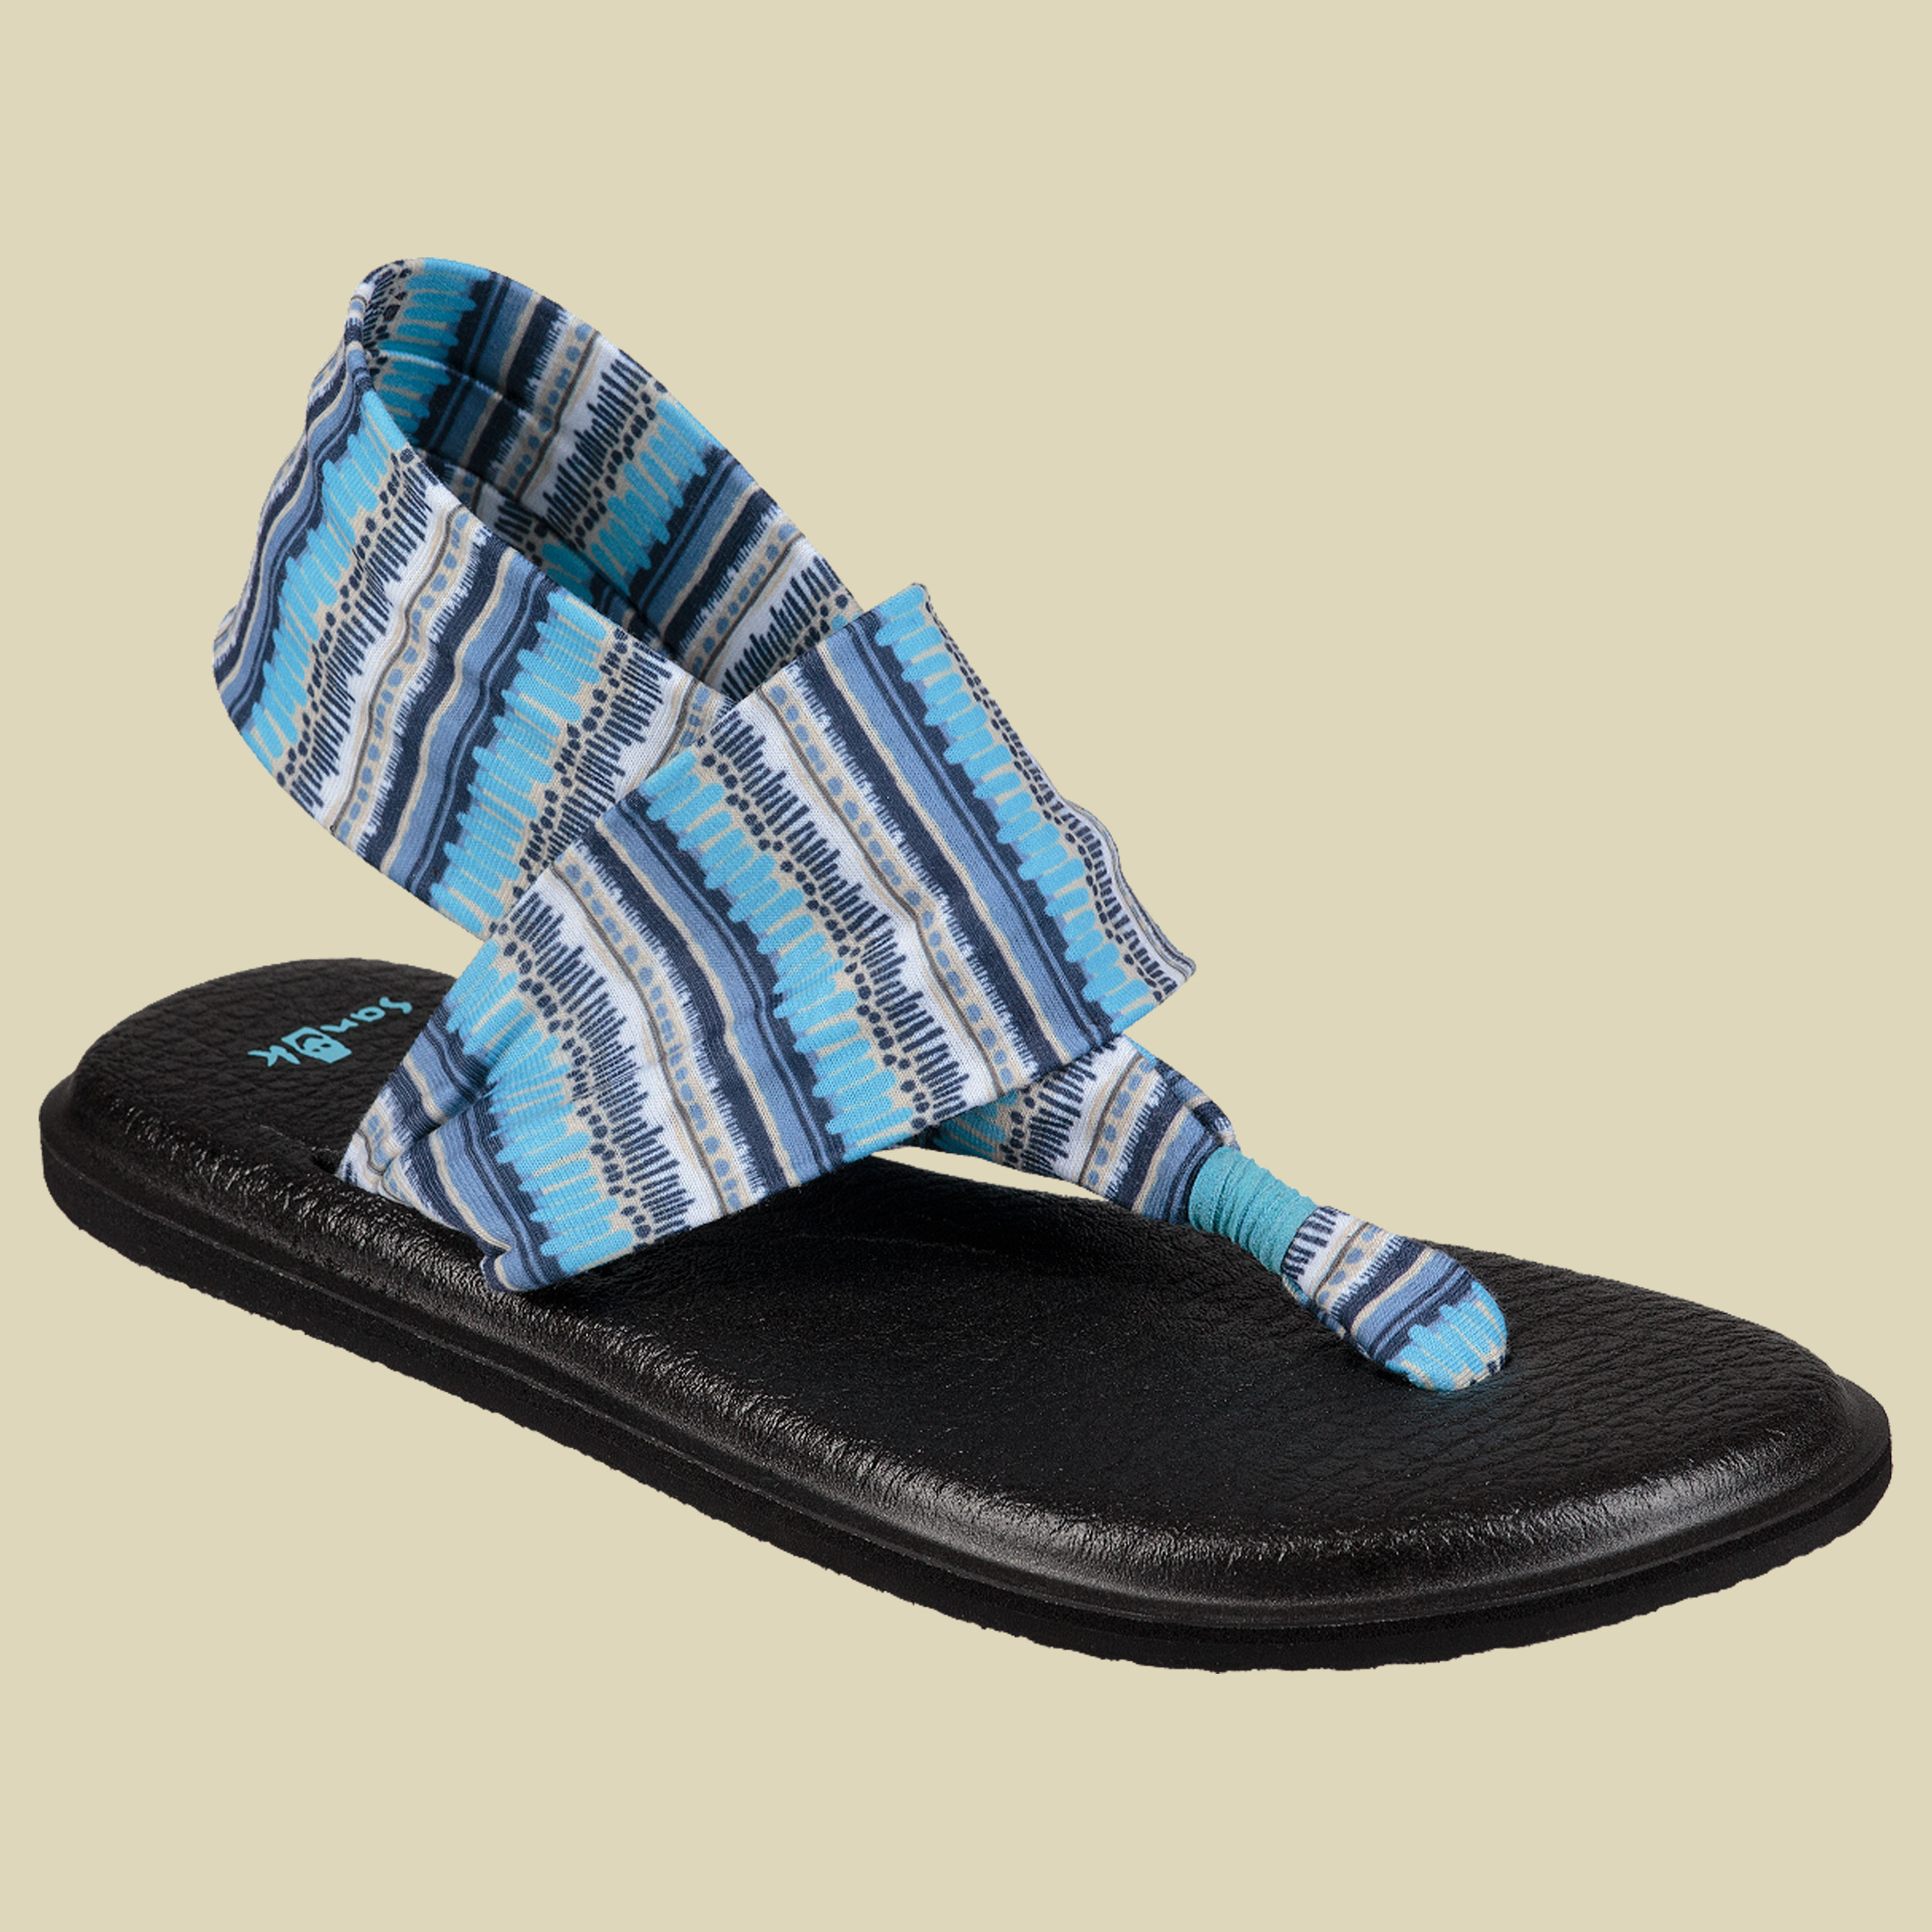 Yoga Sling 2 Prints Sandals Women Größe UK 5 Farbe blue topaz island stripe